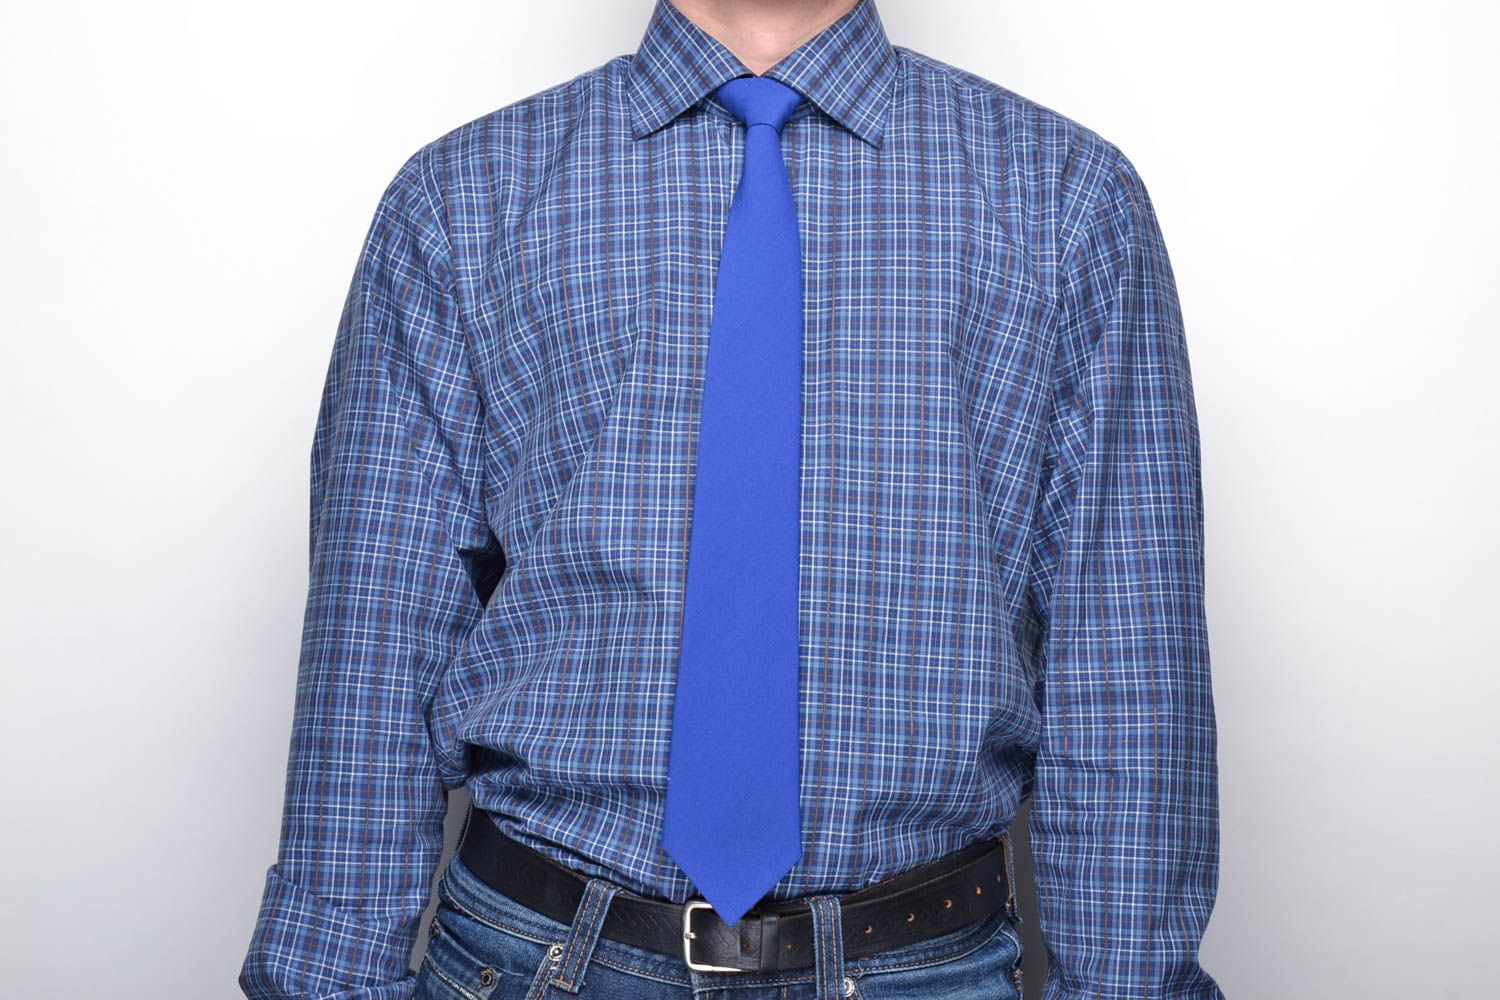 Cravate bleu unicolore faite main photo 2